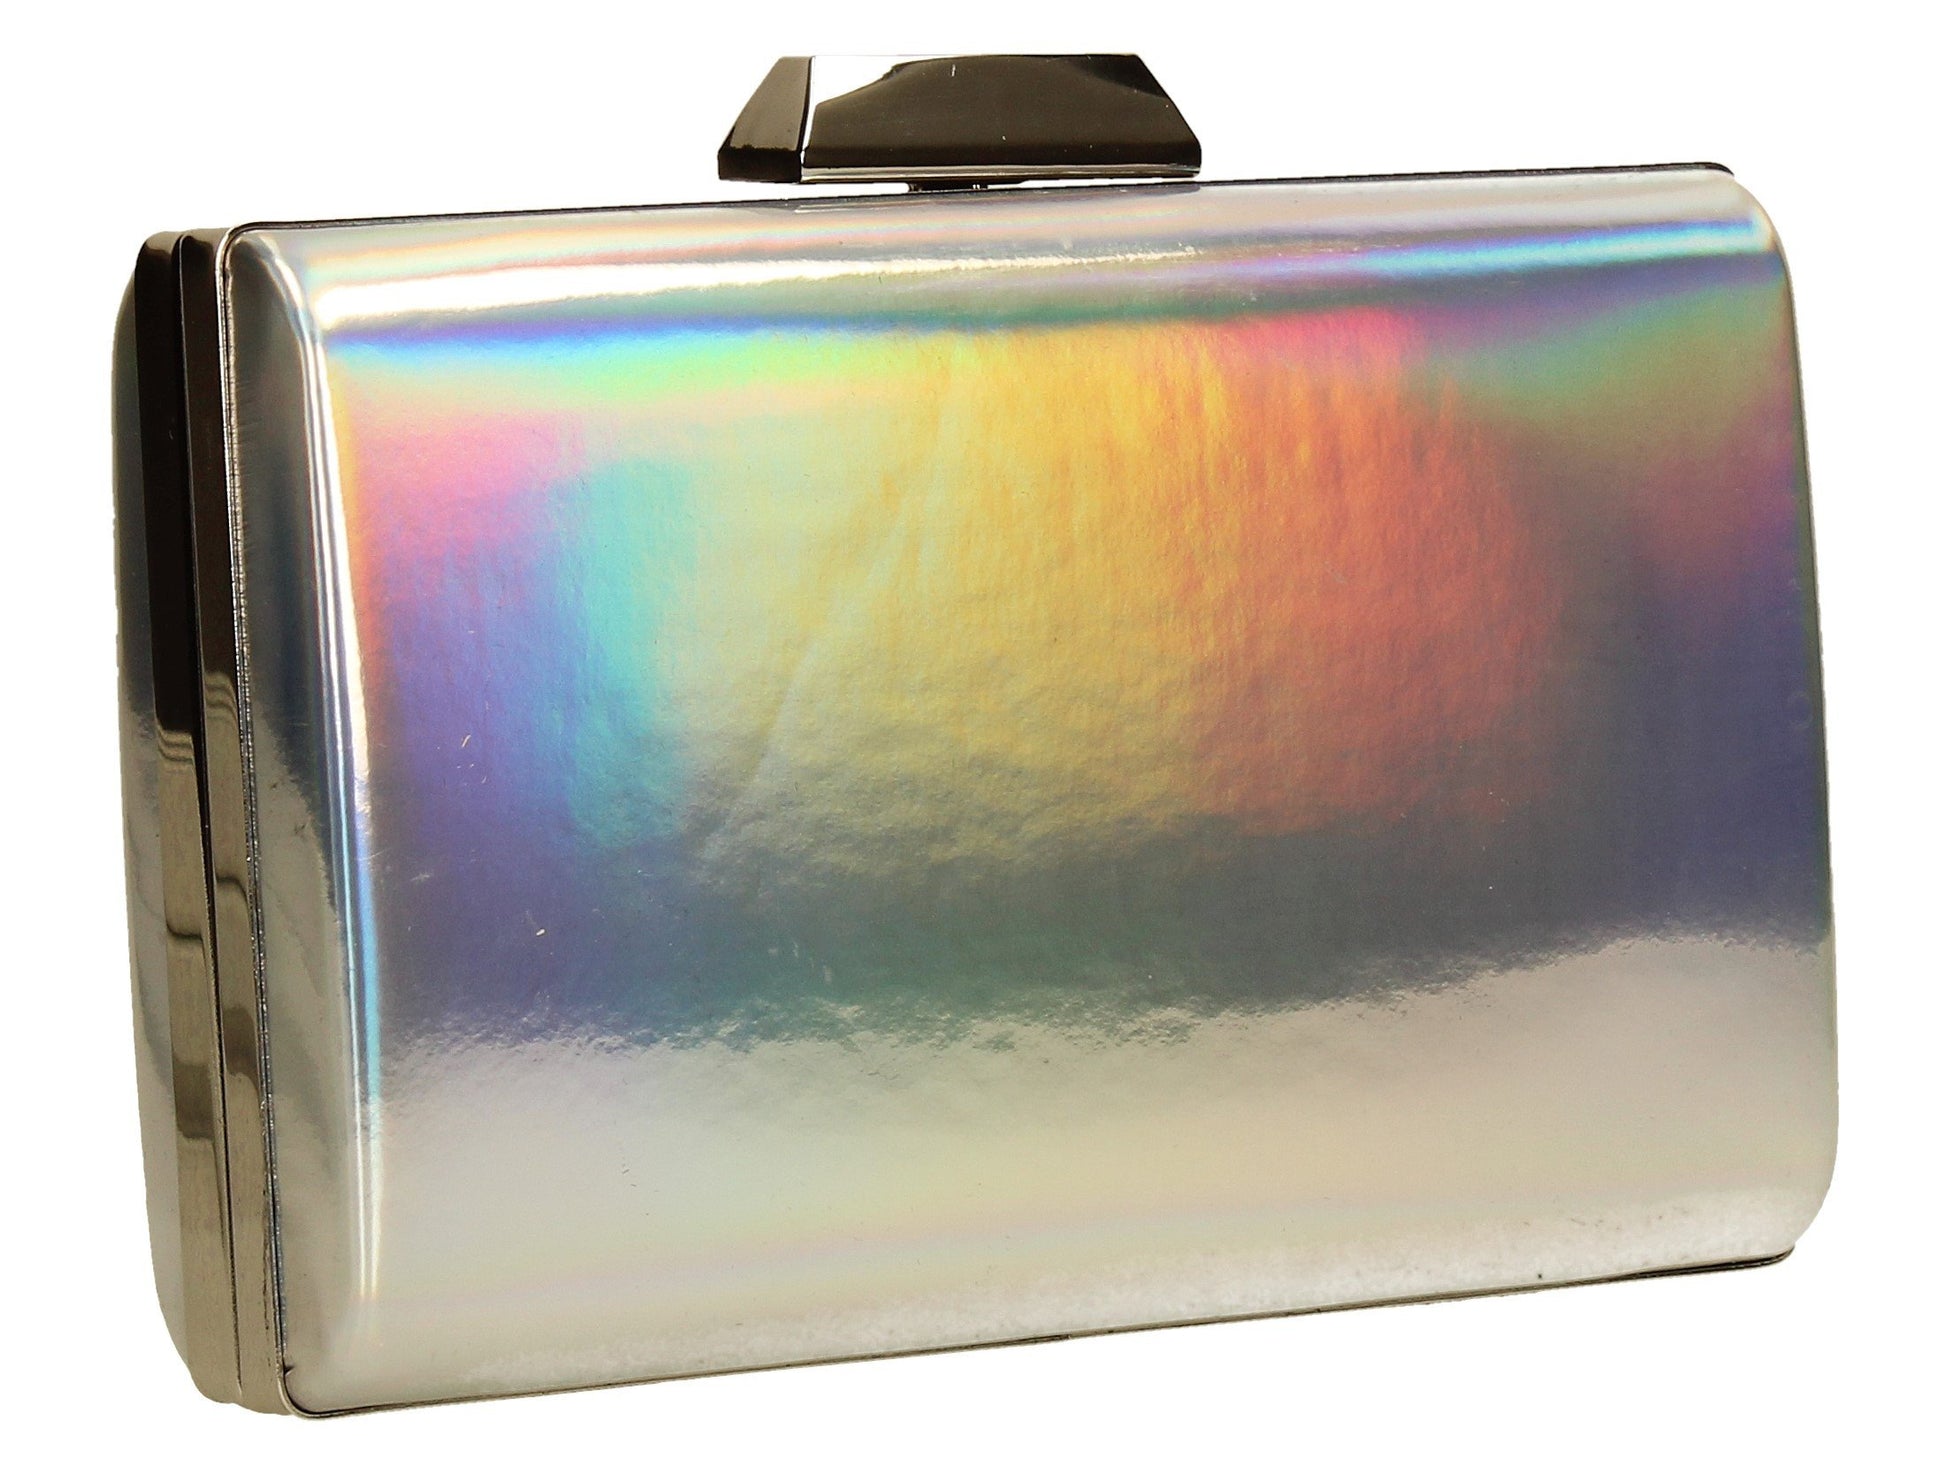 SWANKYSWANS Arizona Metallic Clutch Bag Holograpic Cute Cheap Clutch Bag For Weddings School and Work